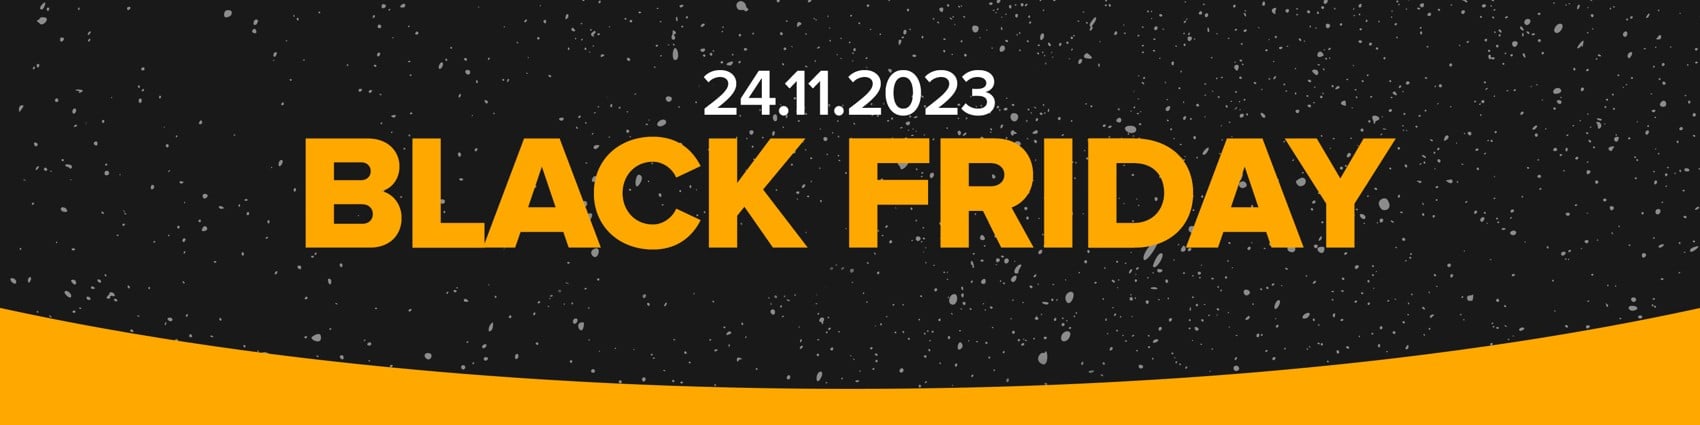 Mondstuk deken Geestig Black Friday 2022 | The best »Black Friday deals« of the year